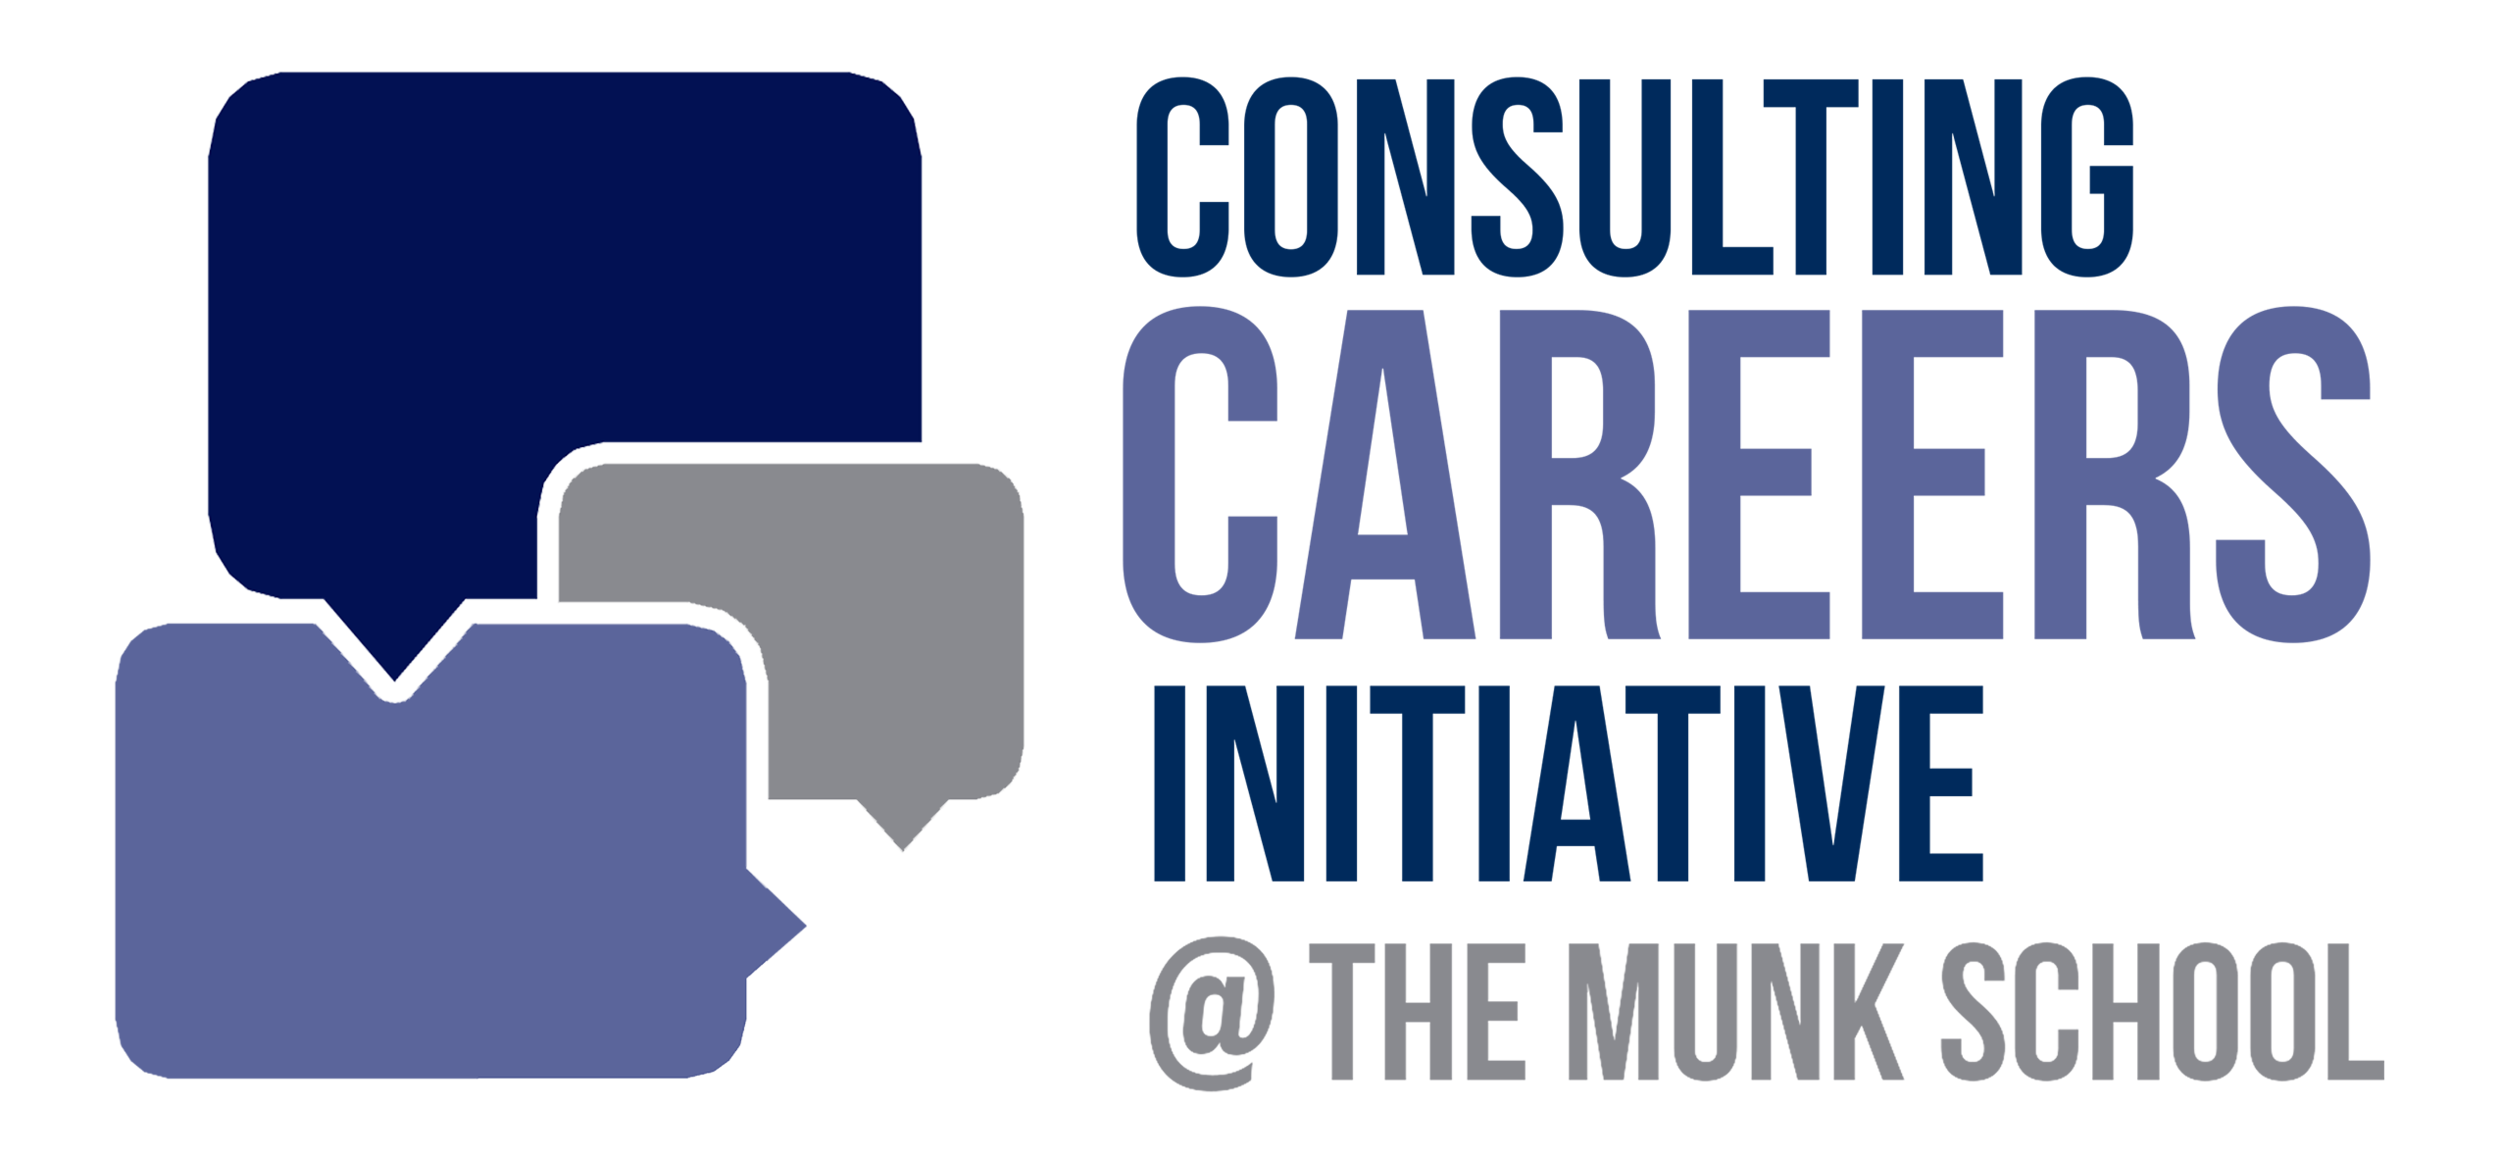 Consulting Careers Initiative @ The Munk School